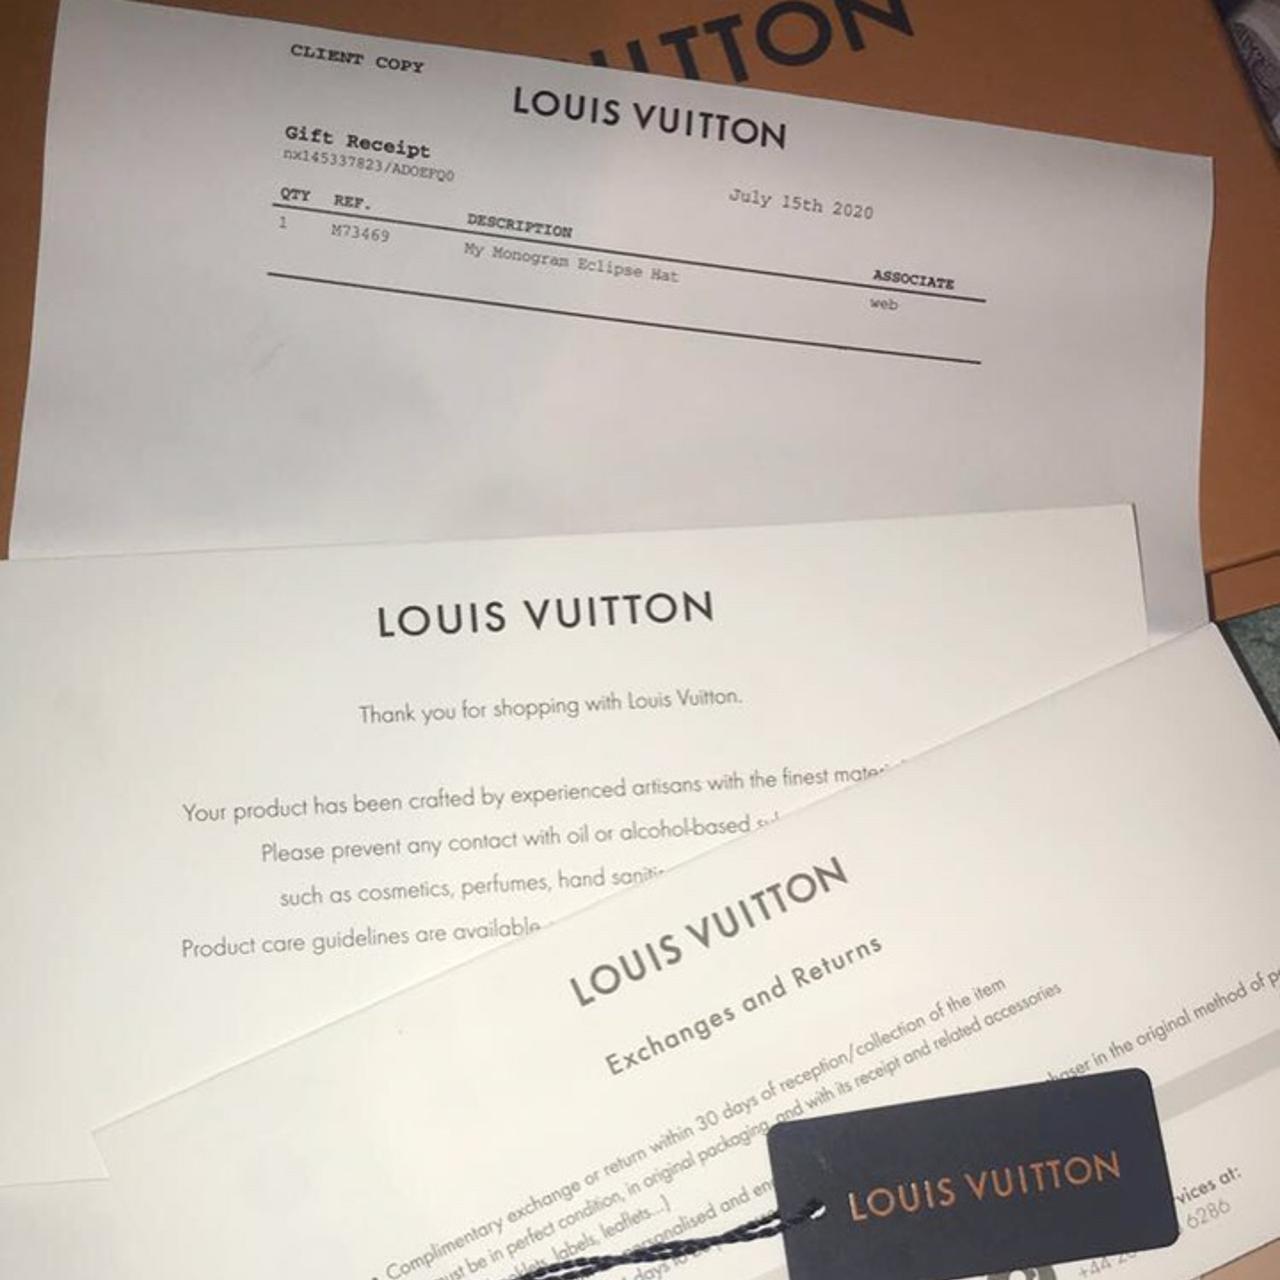 Louis Vuitton Monogram Eclipse Hat, Never Been Worn